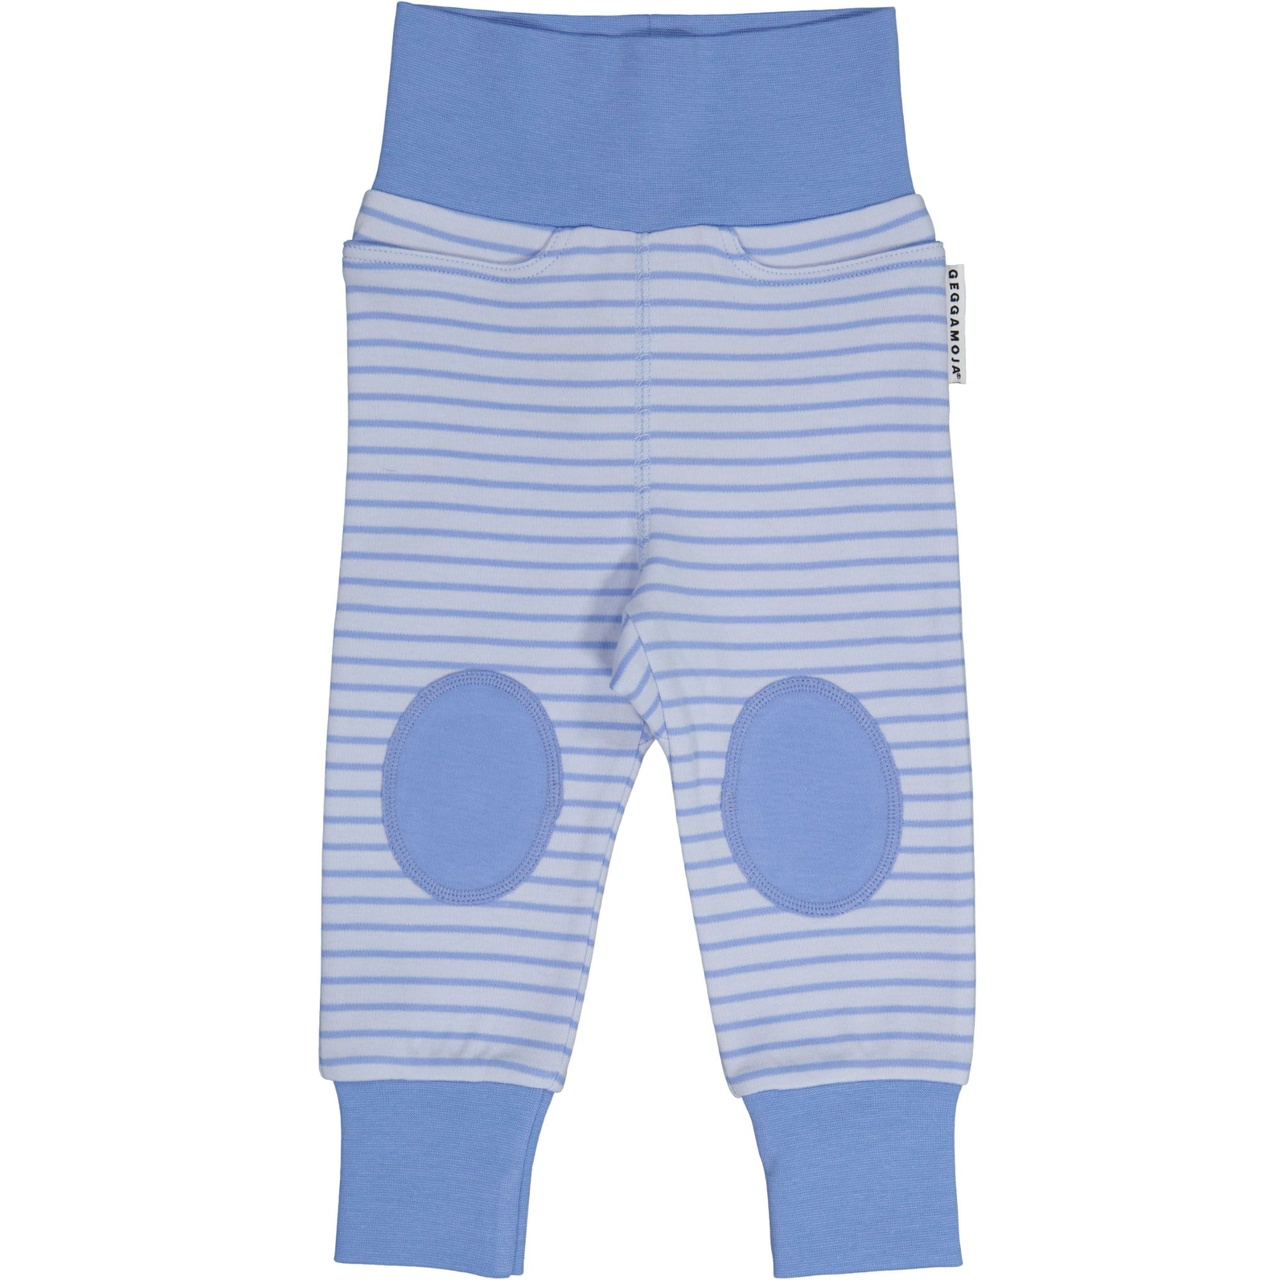 Baby pants Light blue/blue  50/56